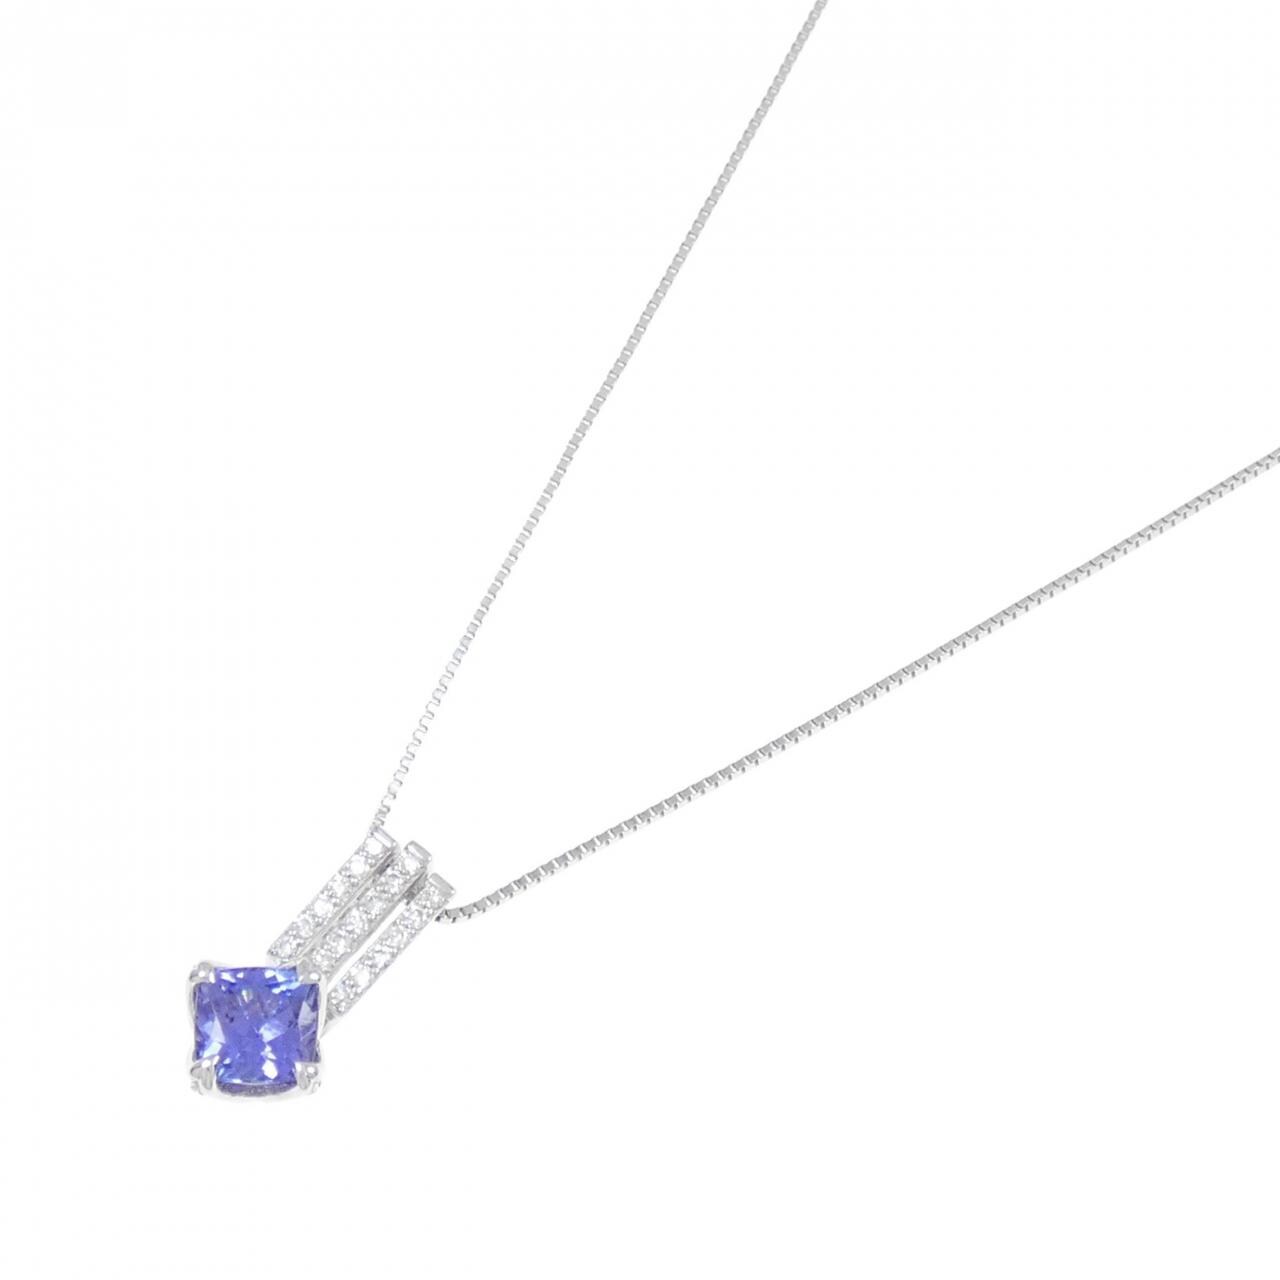 K18WG Tanzanite necklace 1.20CT